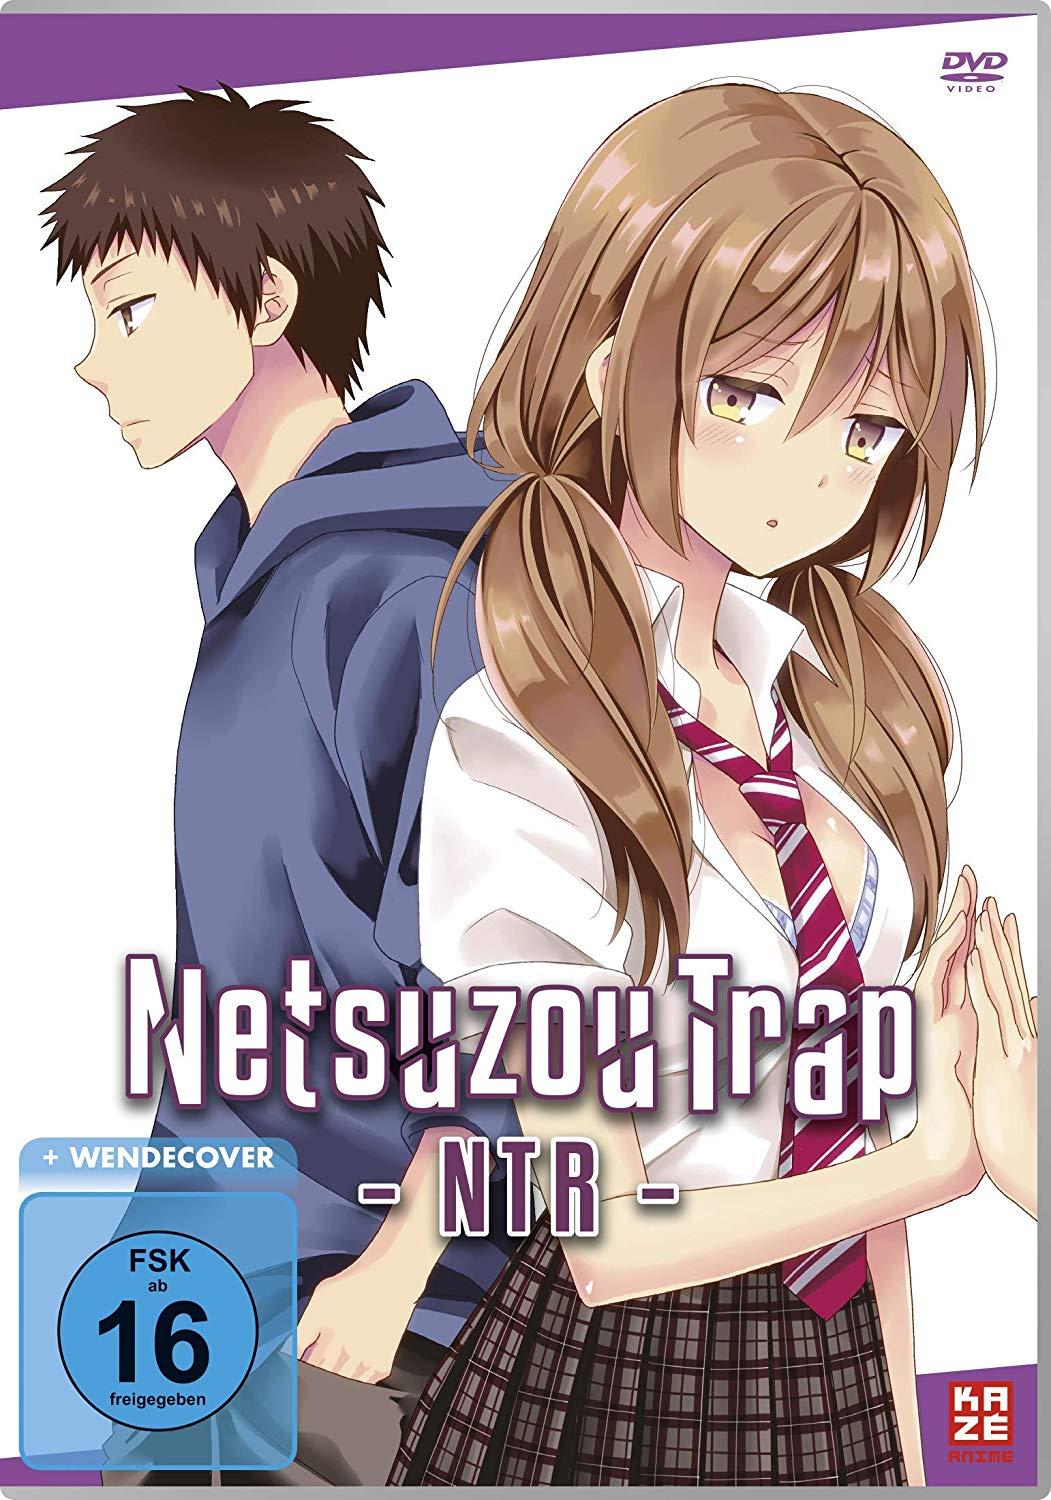 NTR: Netsuzou Trap Wallpapers - Wallpaper Cave